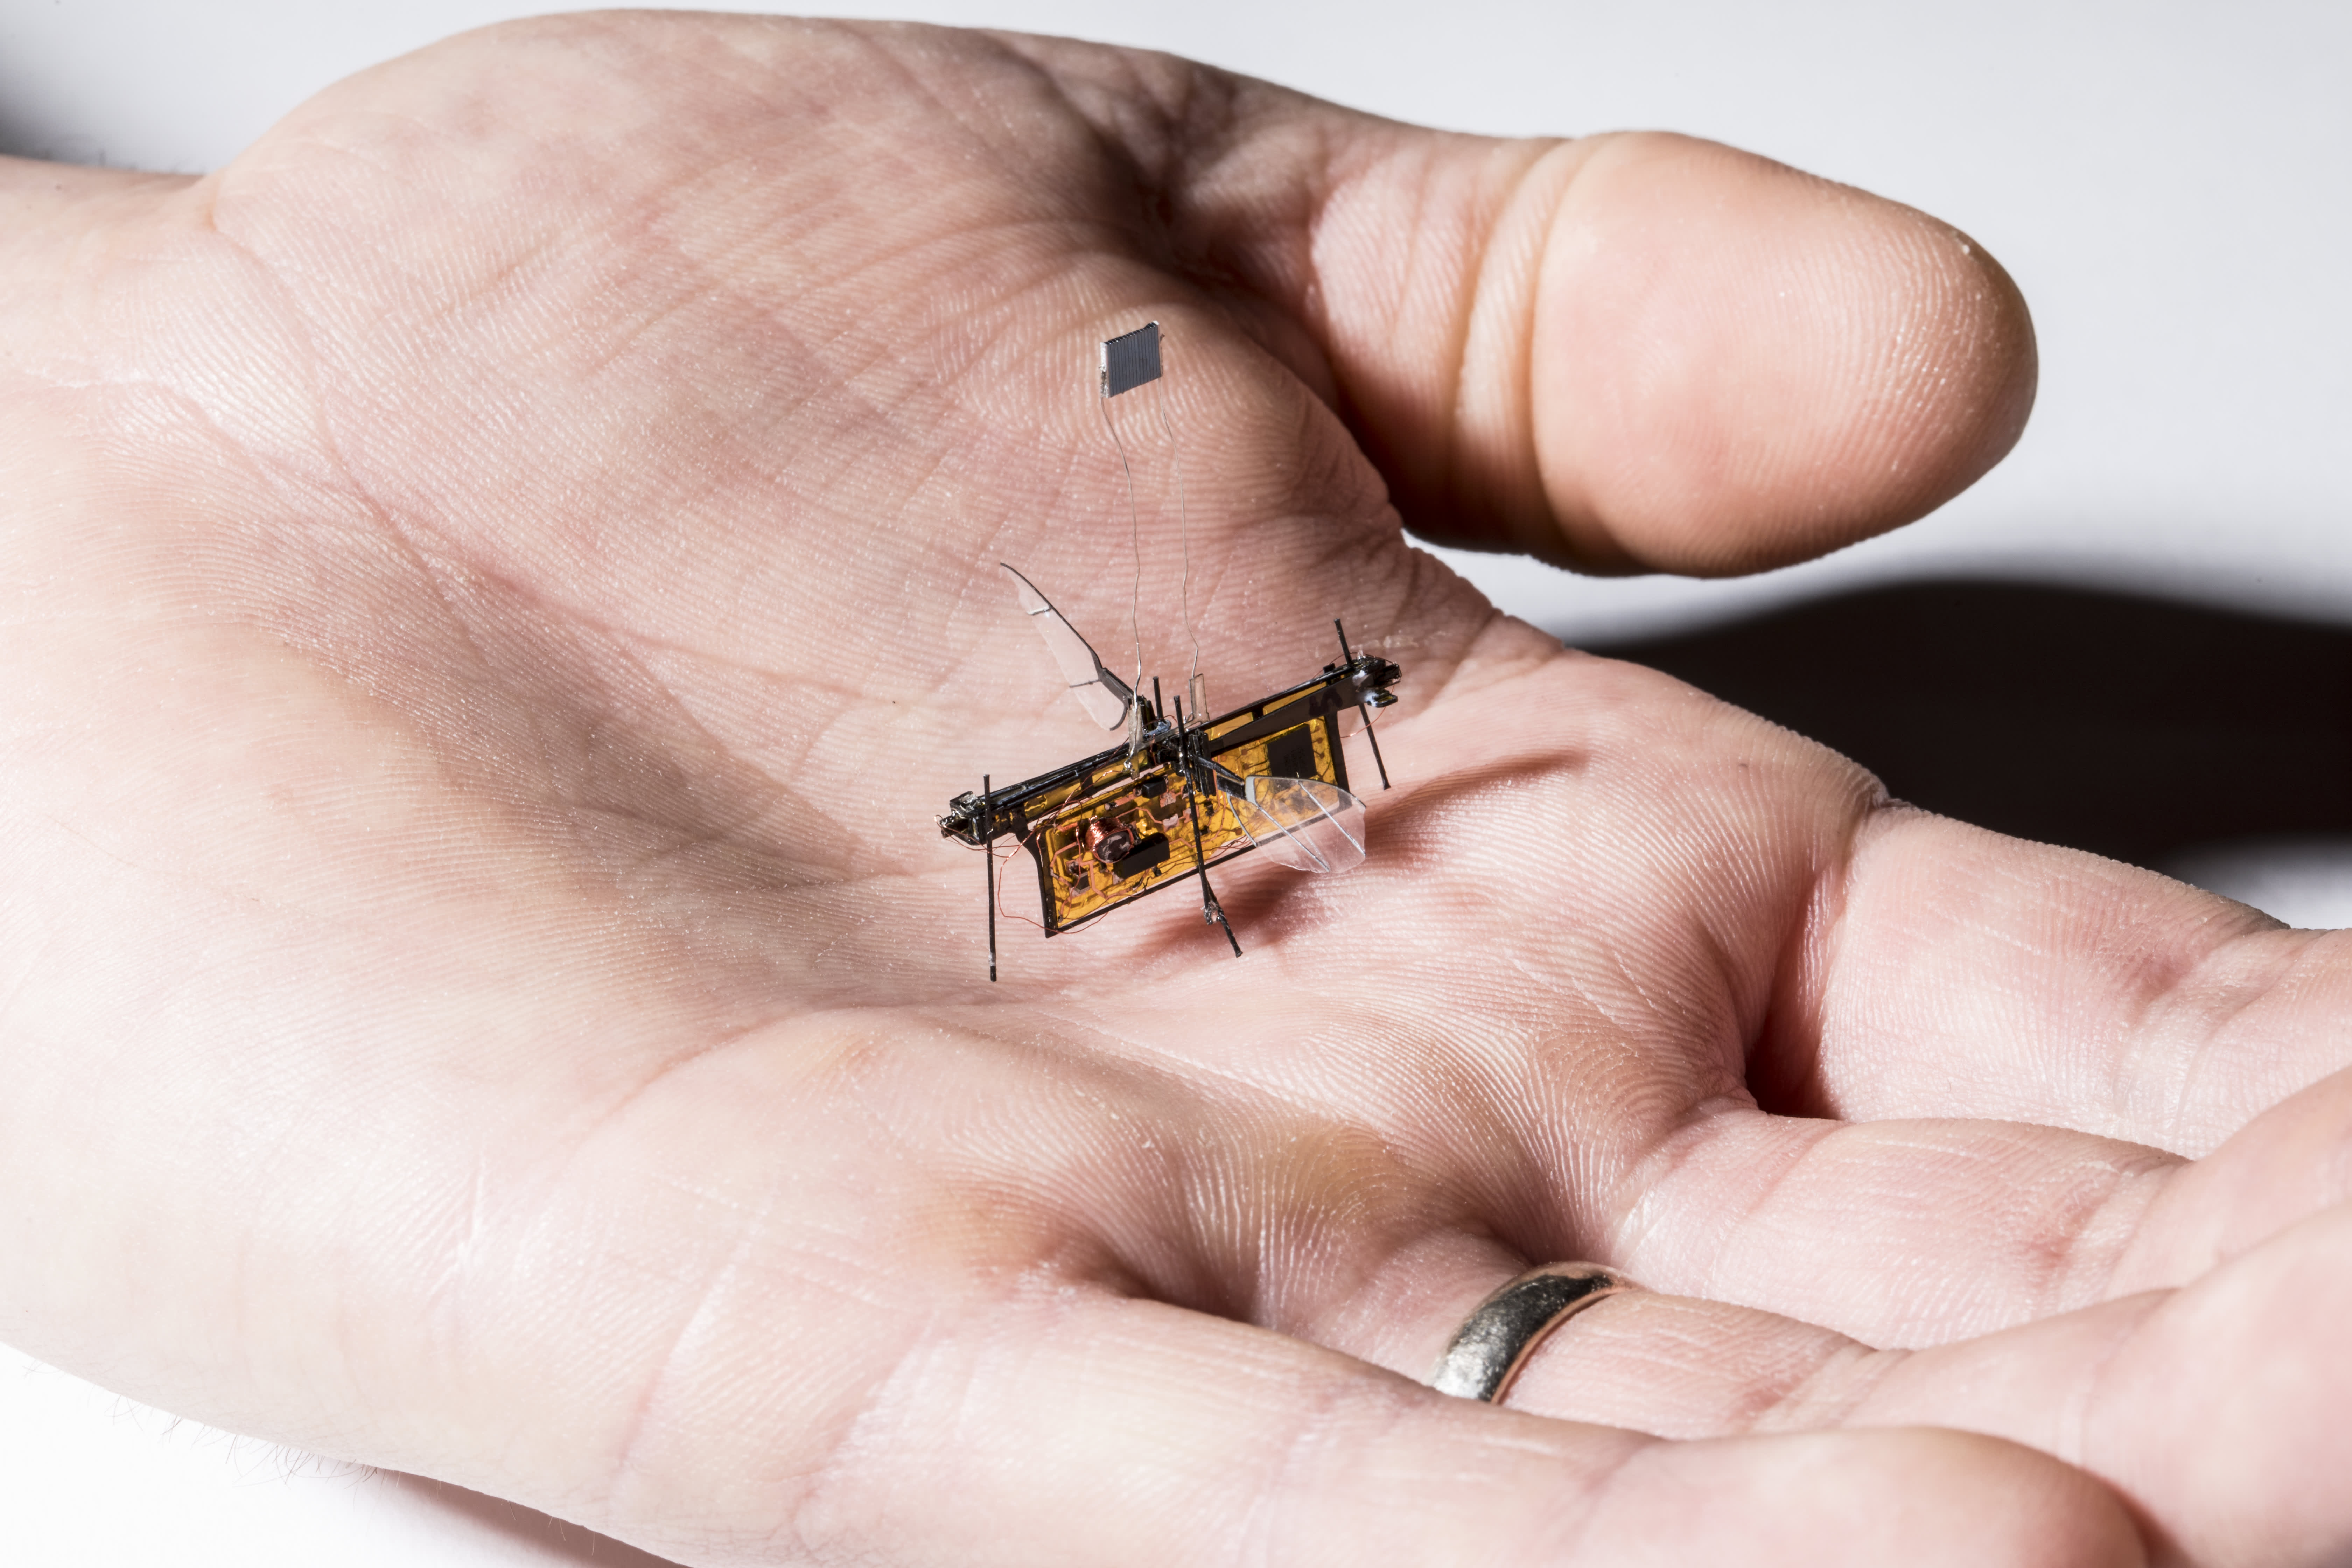 tiny flying robots